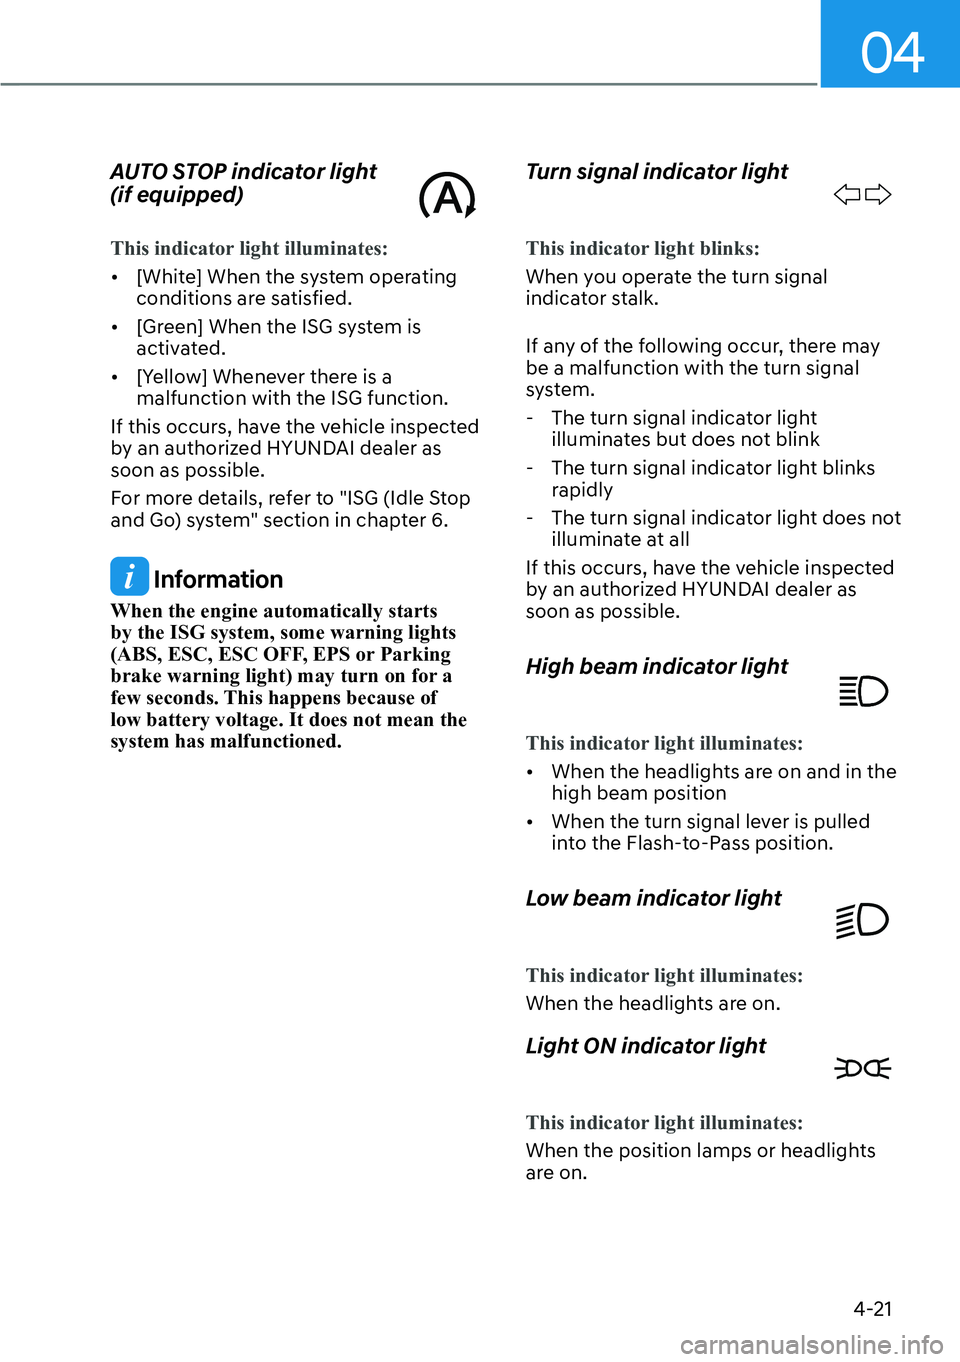 HYUNDAI PALISADE 2023  Owners Manual 04
4-21
AUTO STOP indicator light  
(if equipped)
This indicator light illuminates:
[�[Whit
e] When the system operating 
conditions are satisfied.
[� [Green] When the ISG system is 
activated.
[